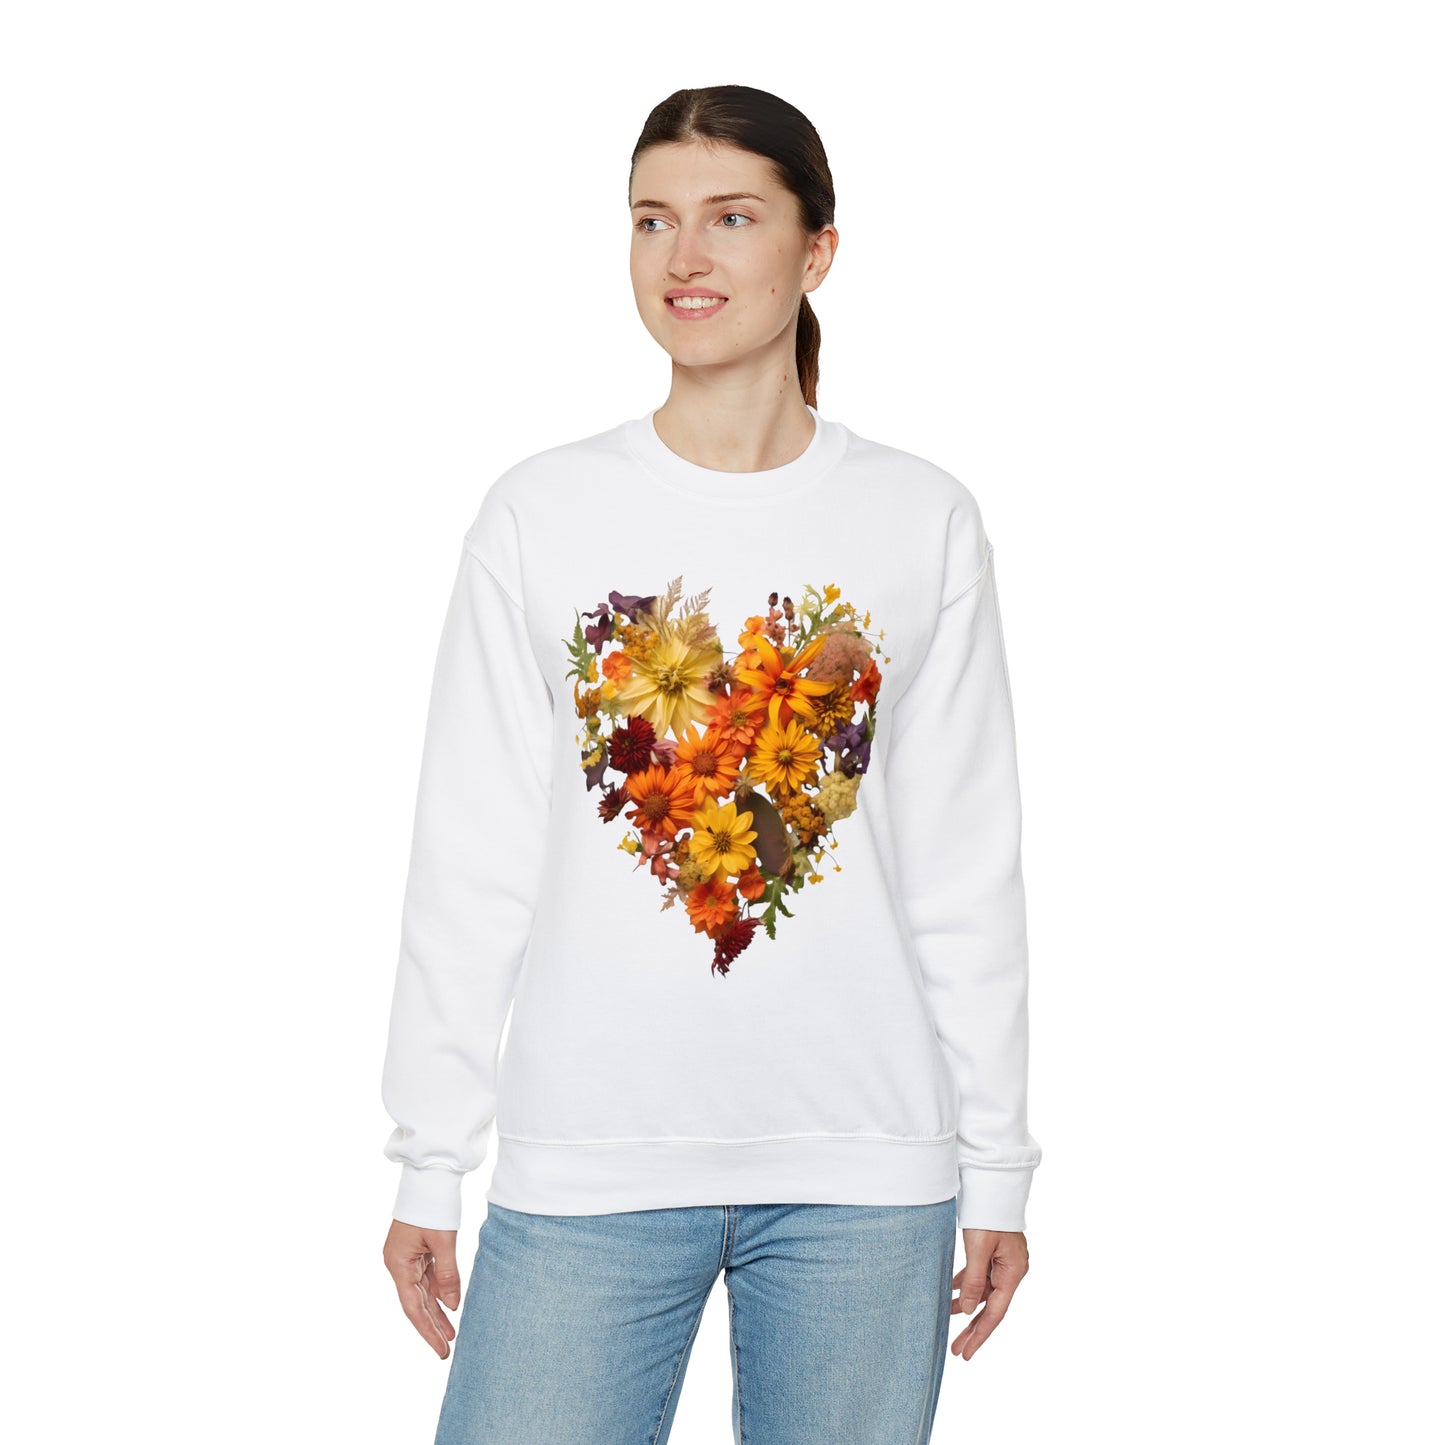 "Heartfelt Autumn: Floral Heart Sweater"